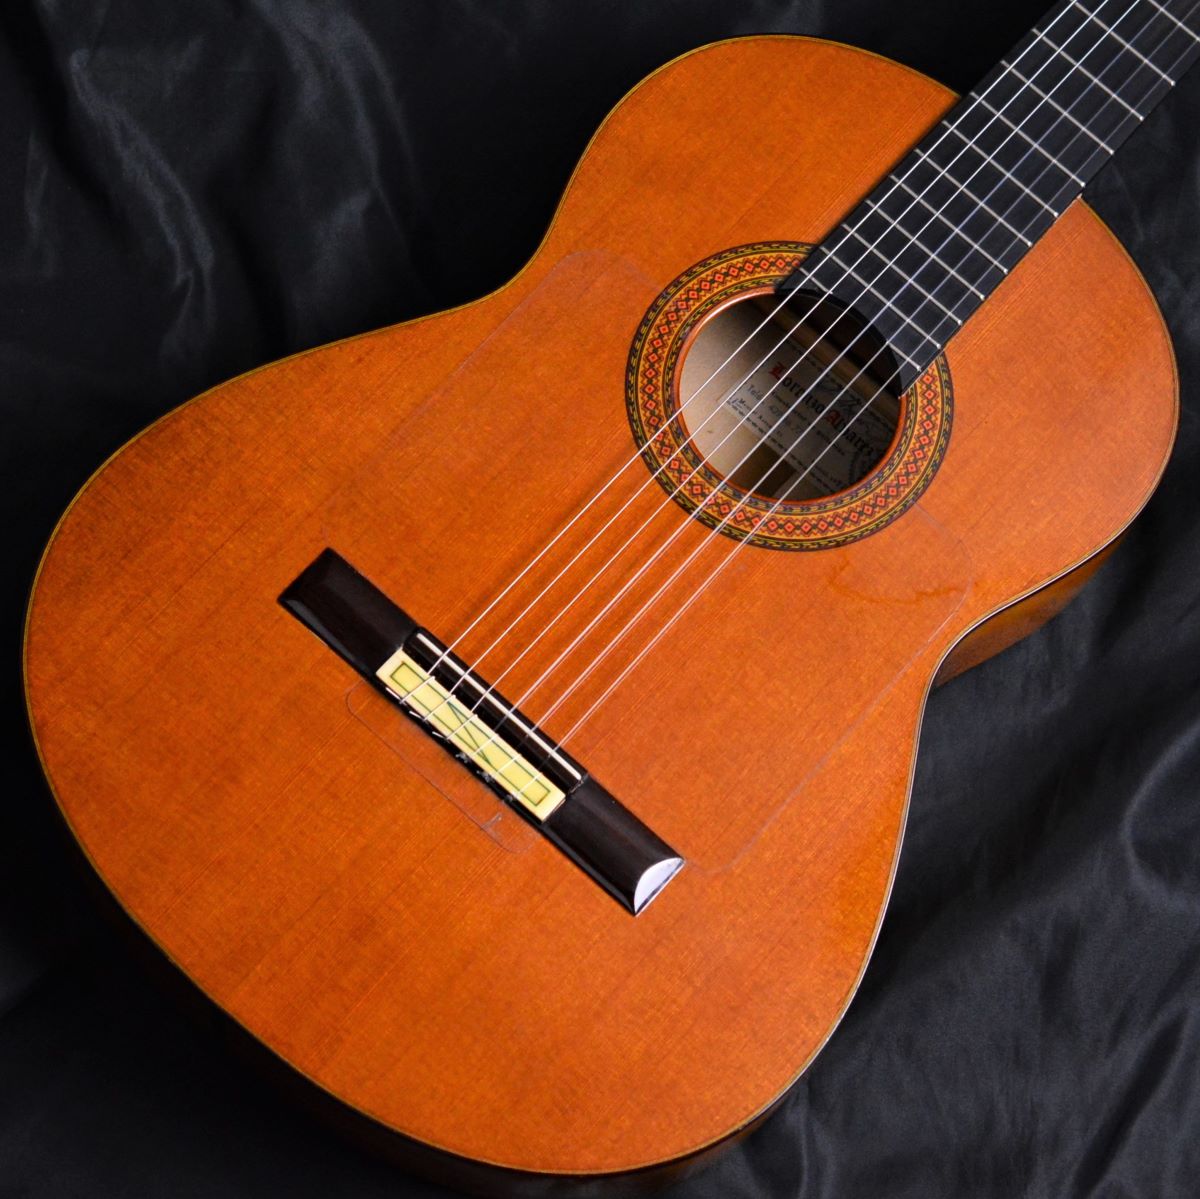 Alvarez アルバレス クラシックギター NO.160 - アコースティックギター